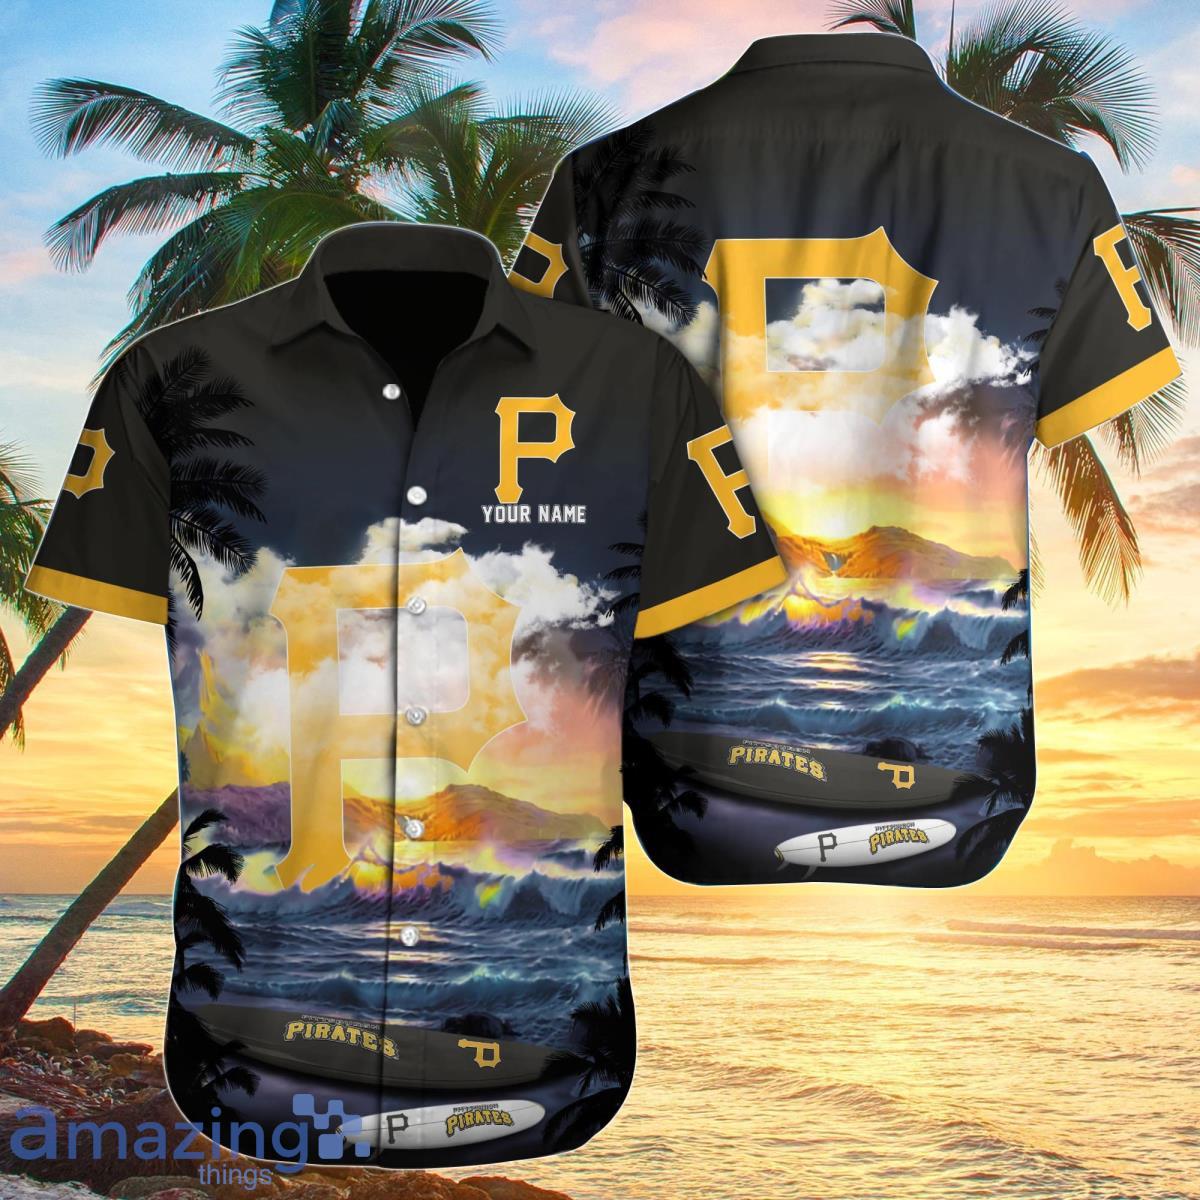 Pittsburgh Pirates personalized shirt